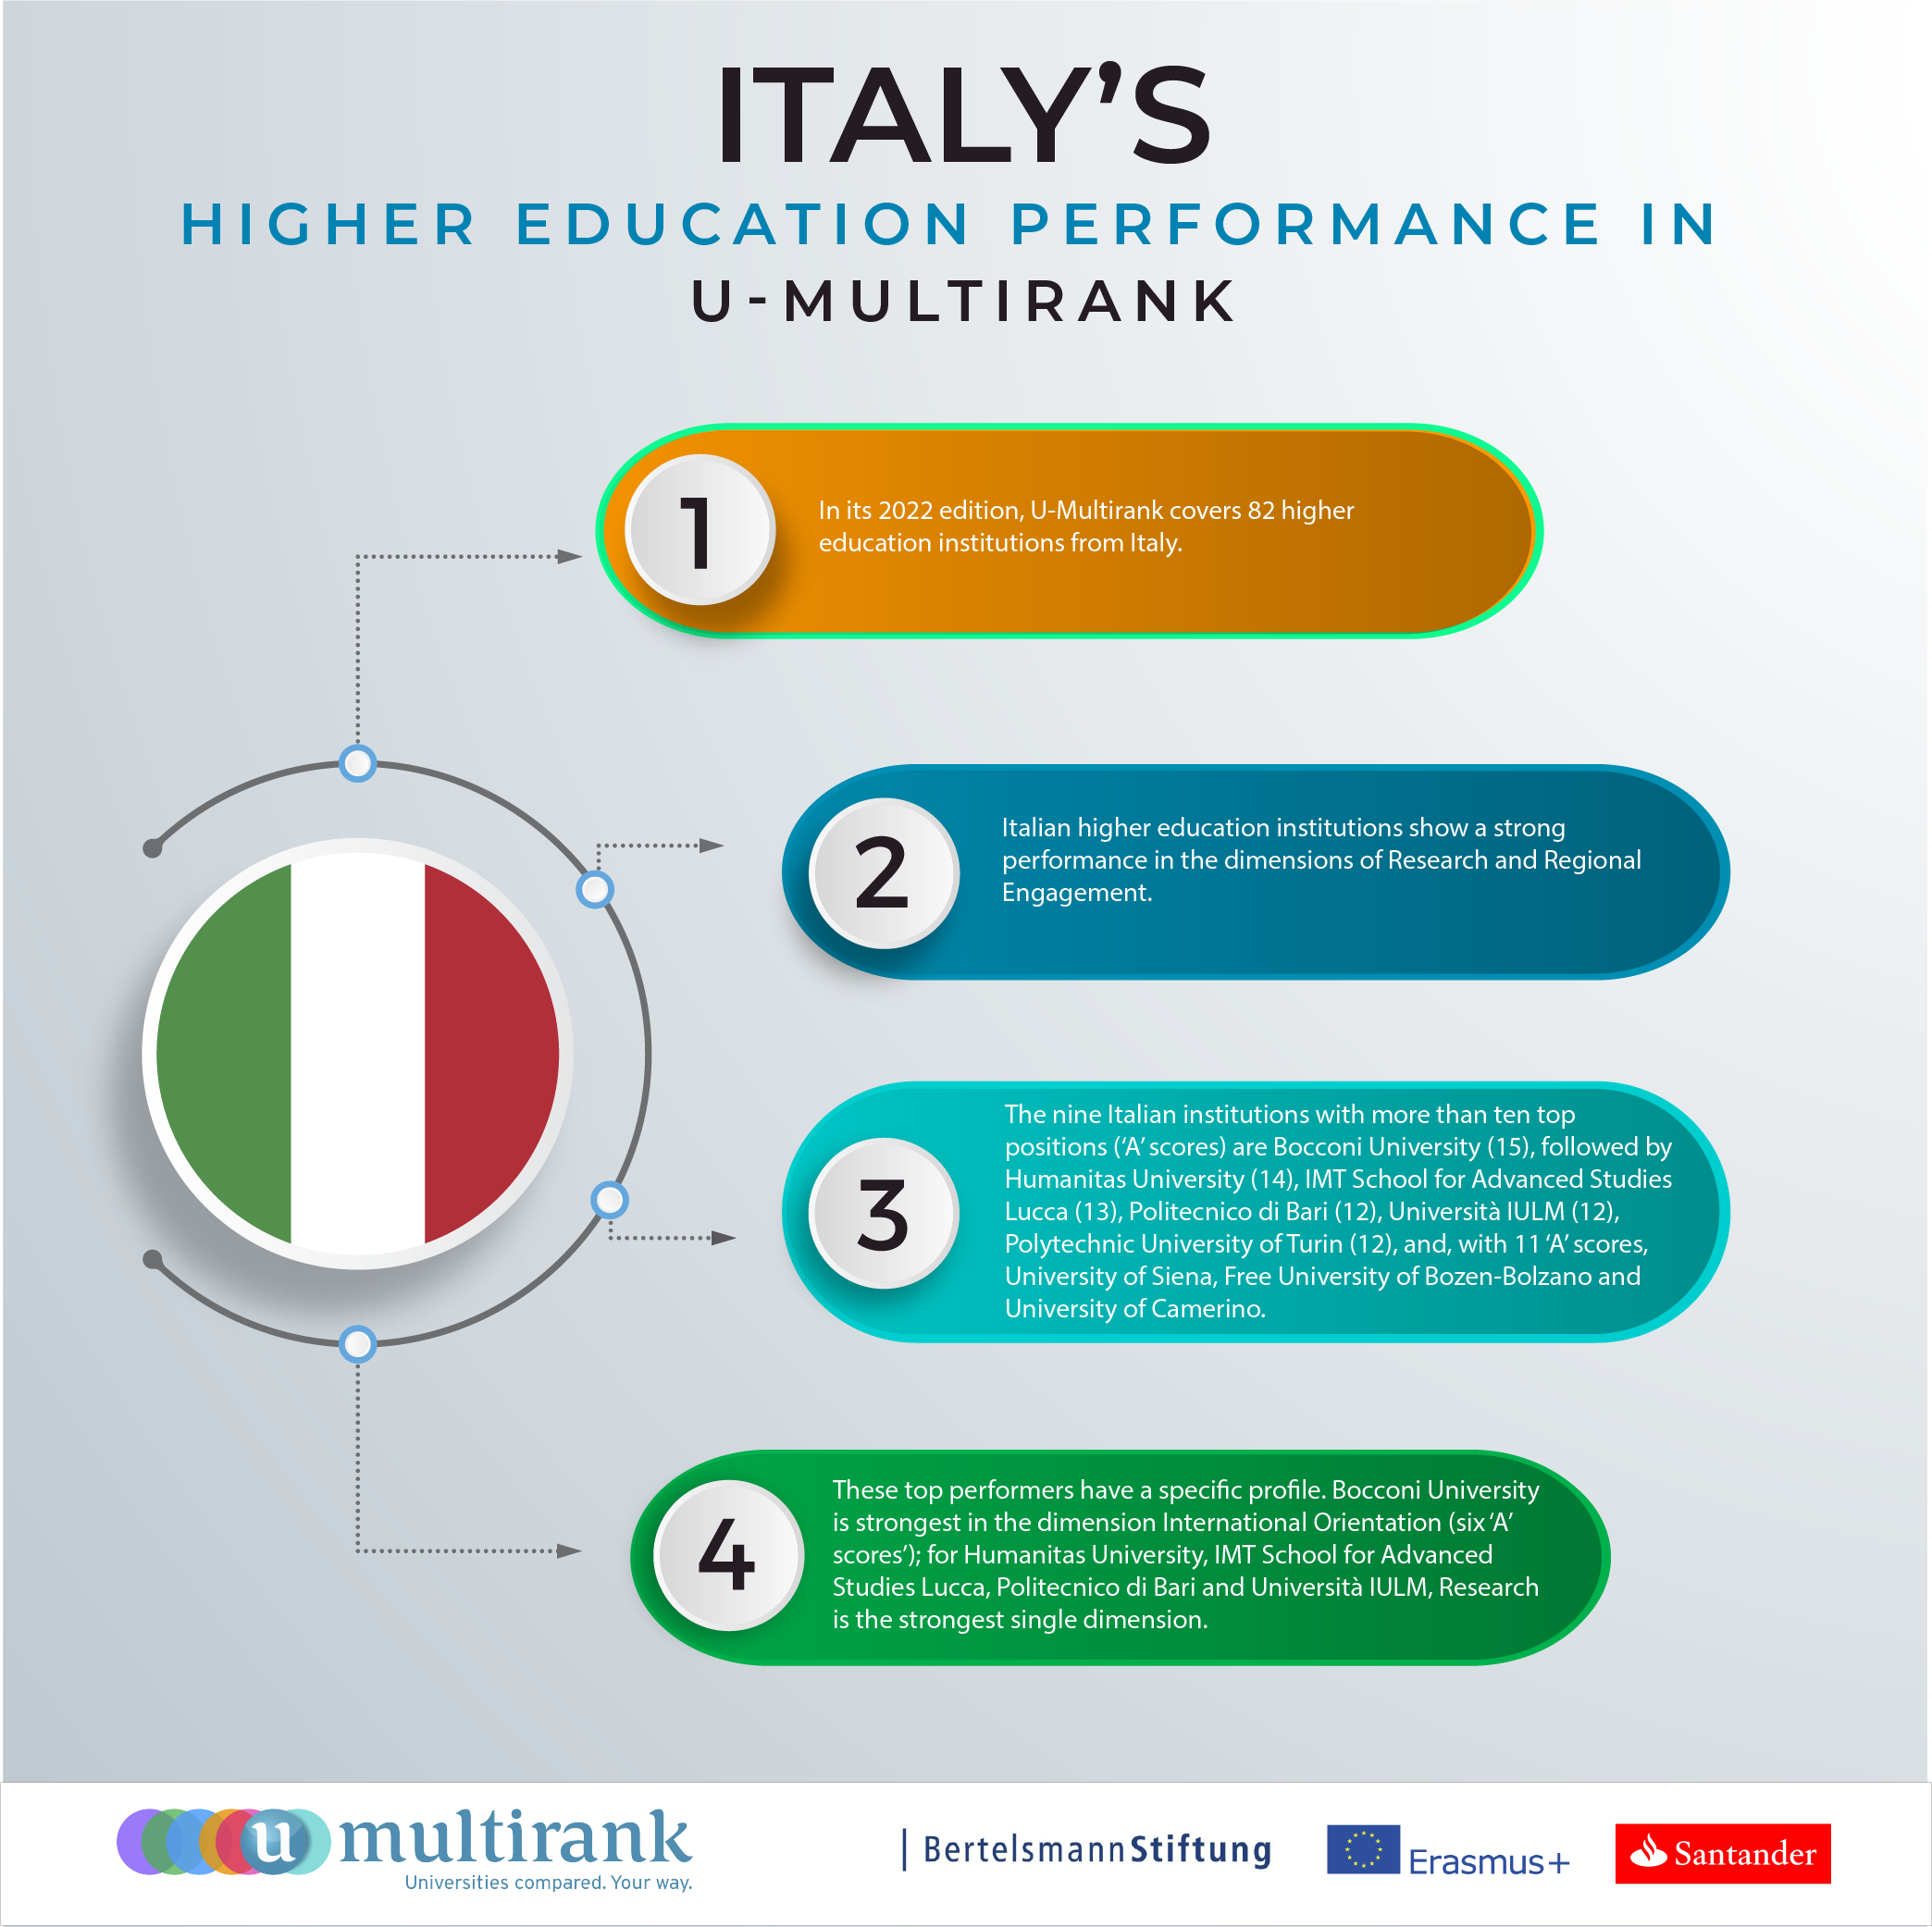 Italy's Higher Education Performance in U-Multirank